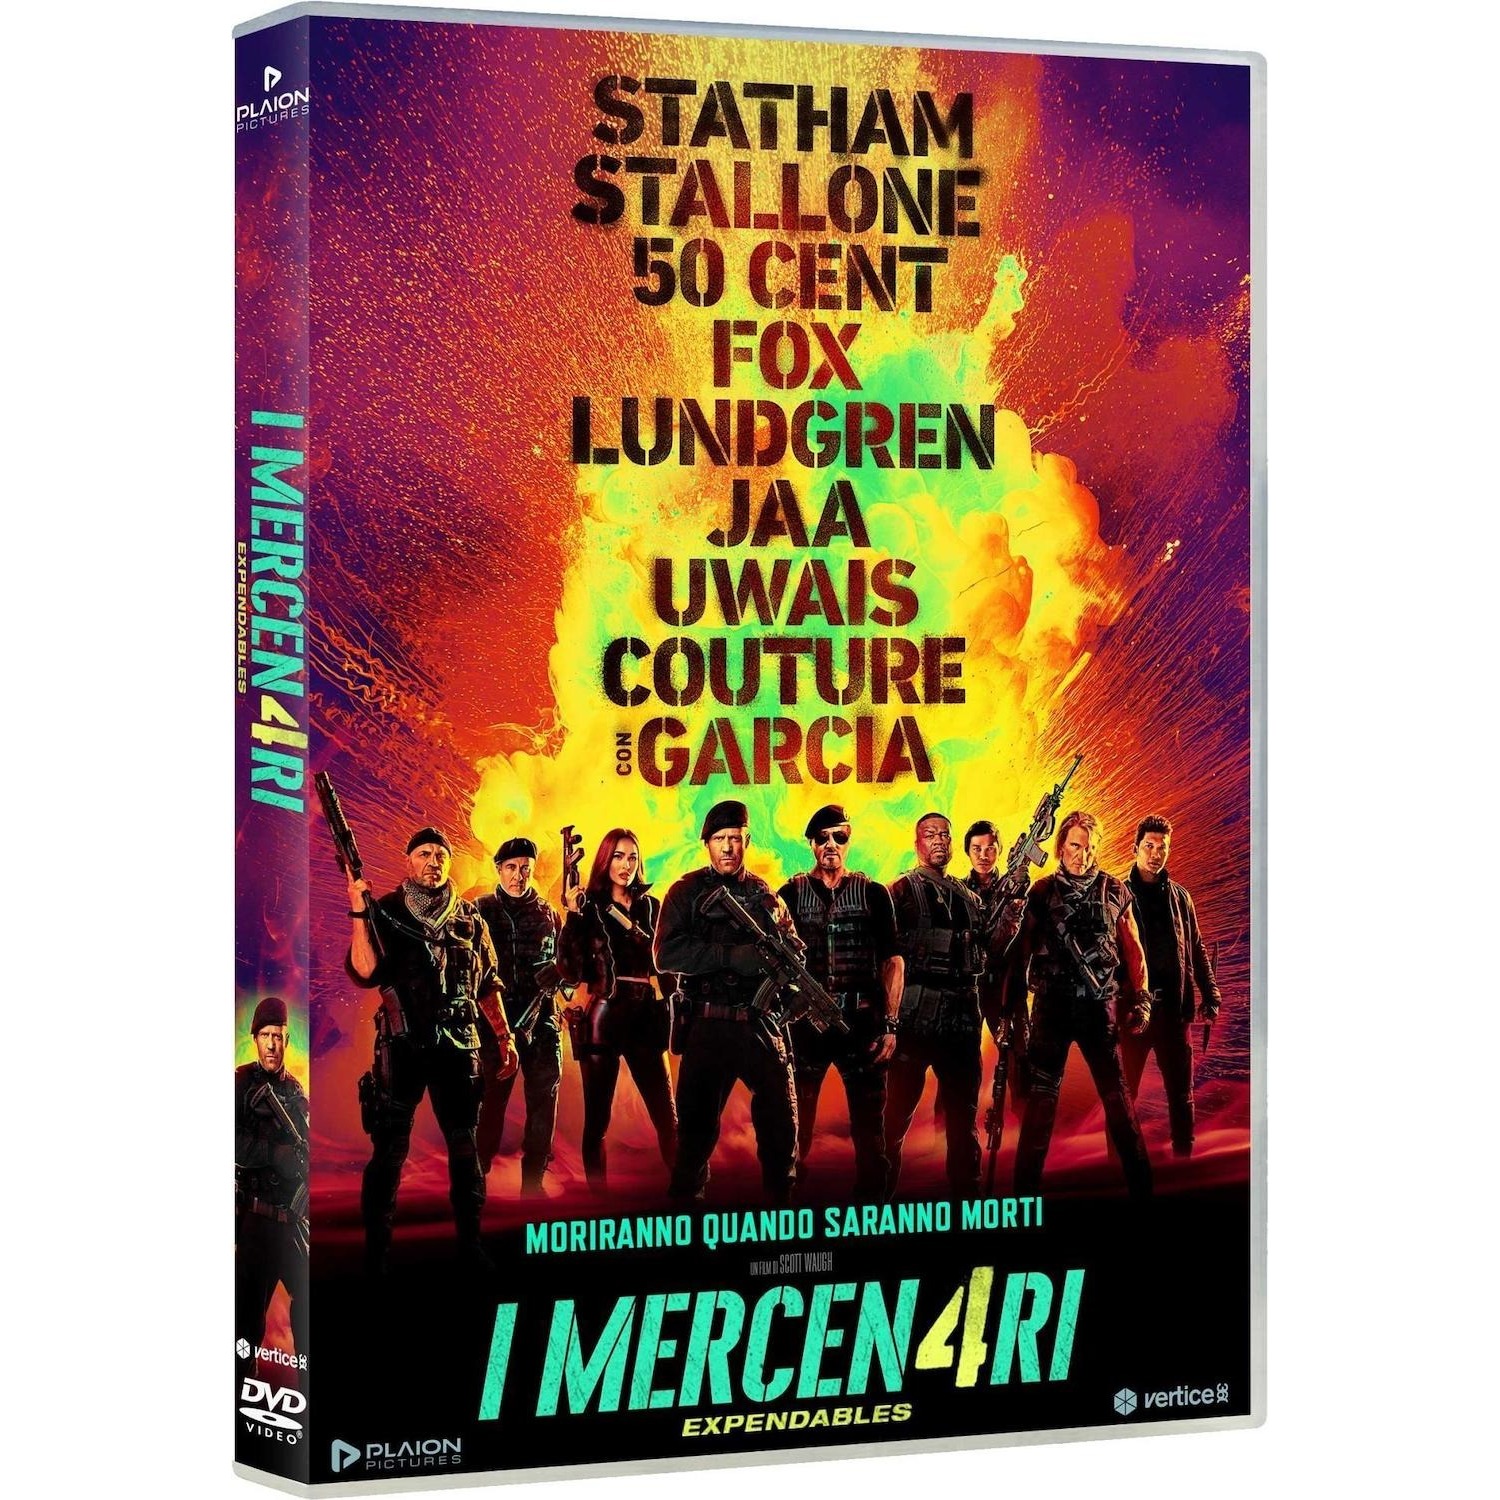 Immagine per DVD I Mercen4ri - Expendables da DIMOStore